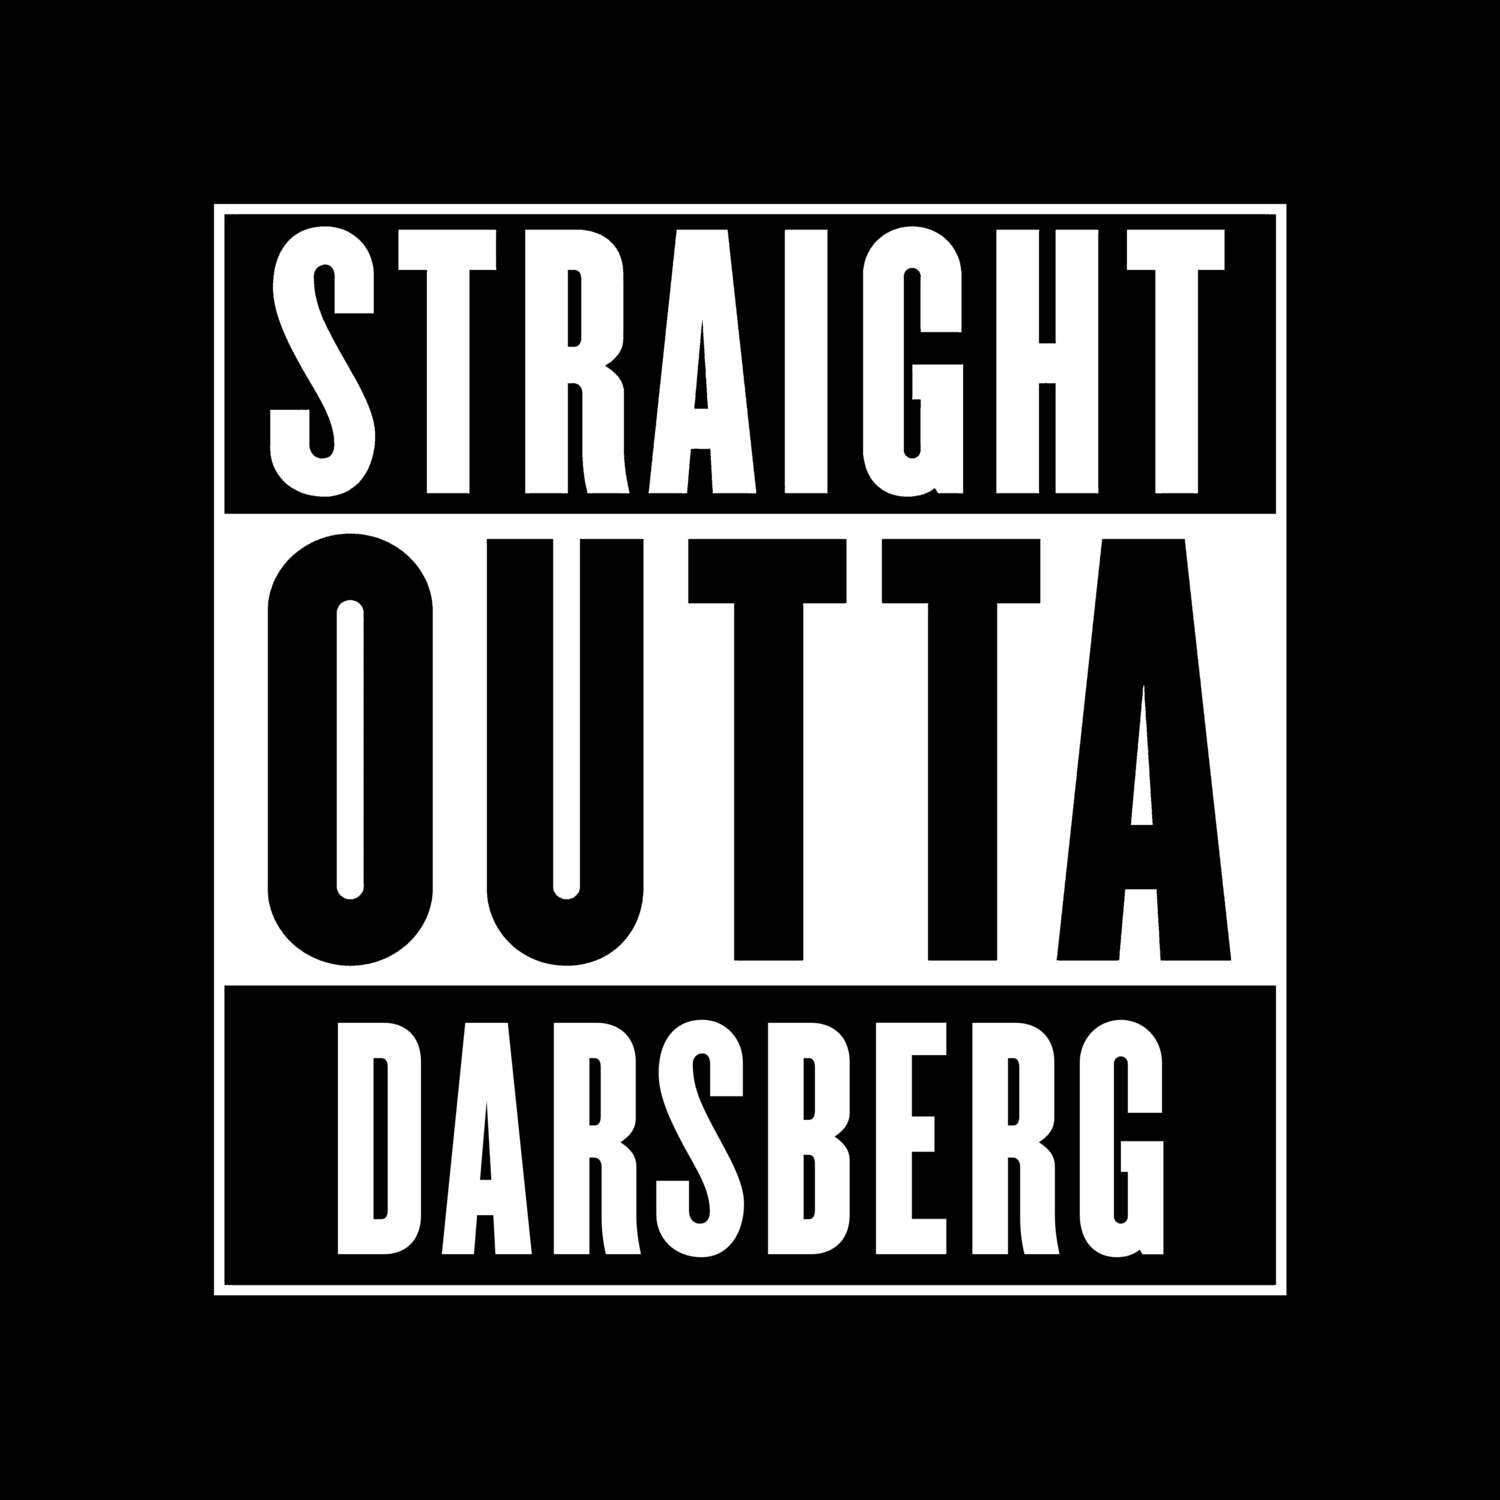 Darsberg T-Shirt »Straight Outta«